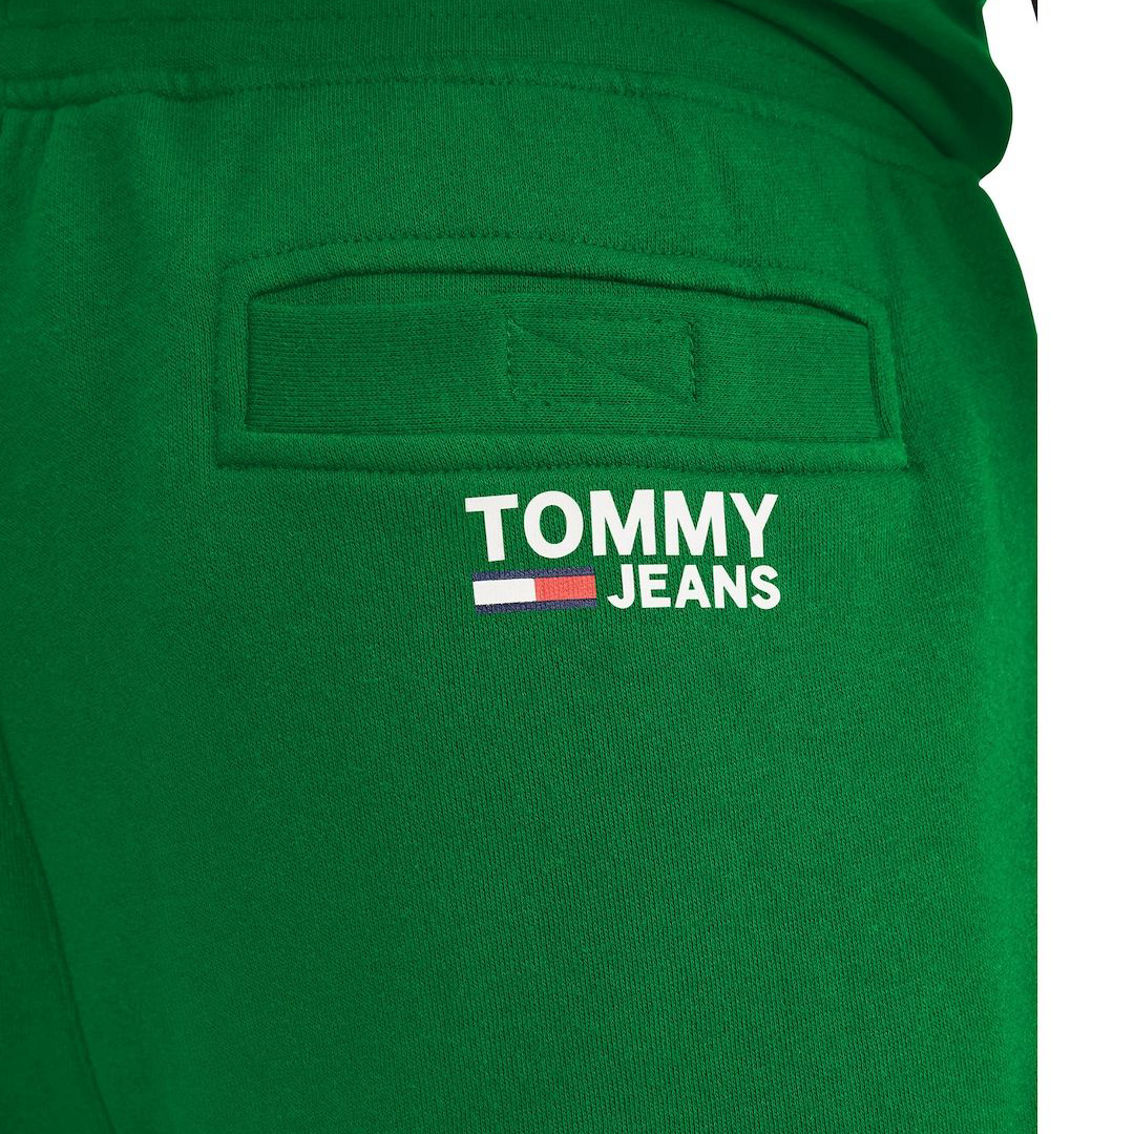 Tommy Jeans Men's Green Boston Celtics Carl Bi-Blend Fleece Jogger Pants - Image 4 of 4